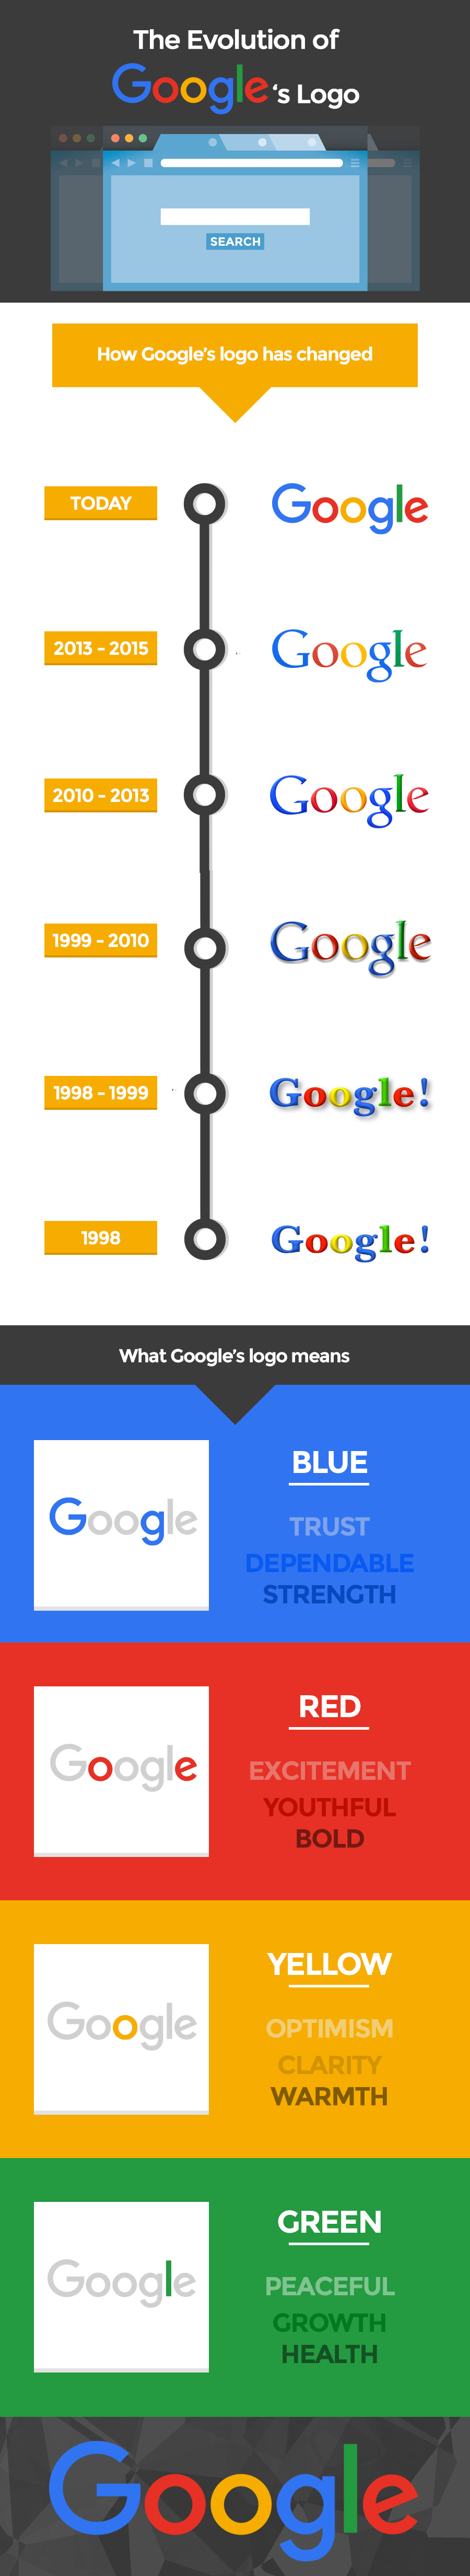 infographie-evolution-logo-google